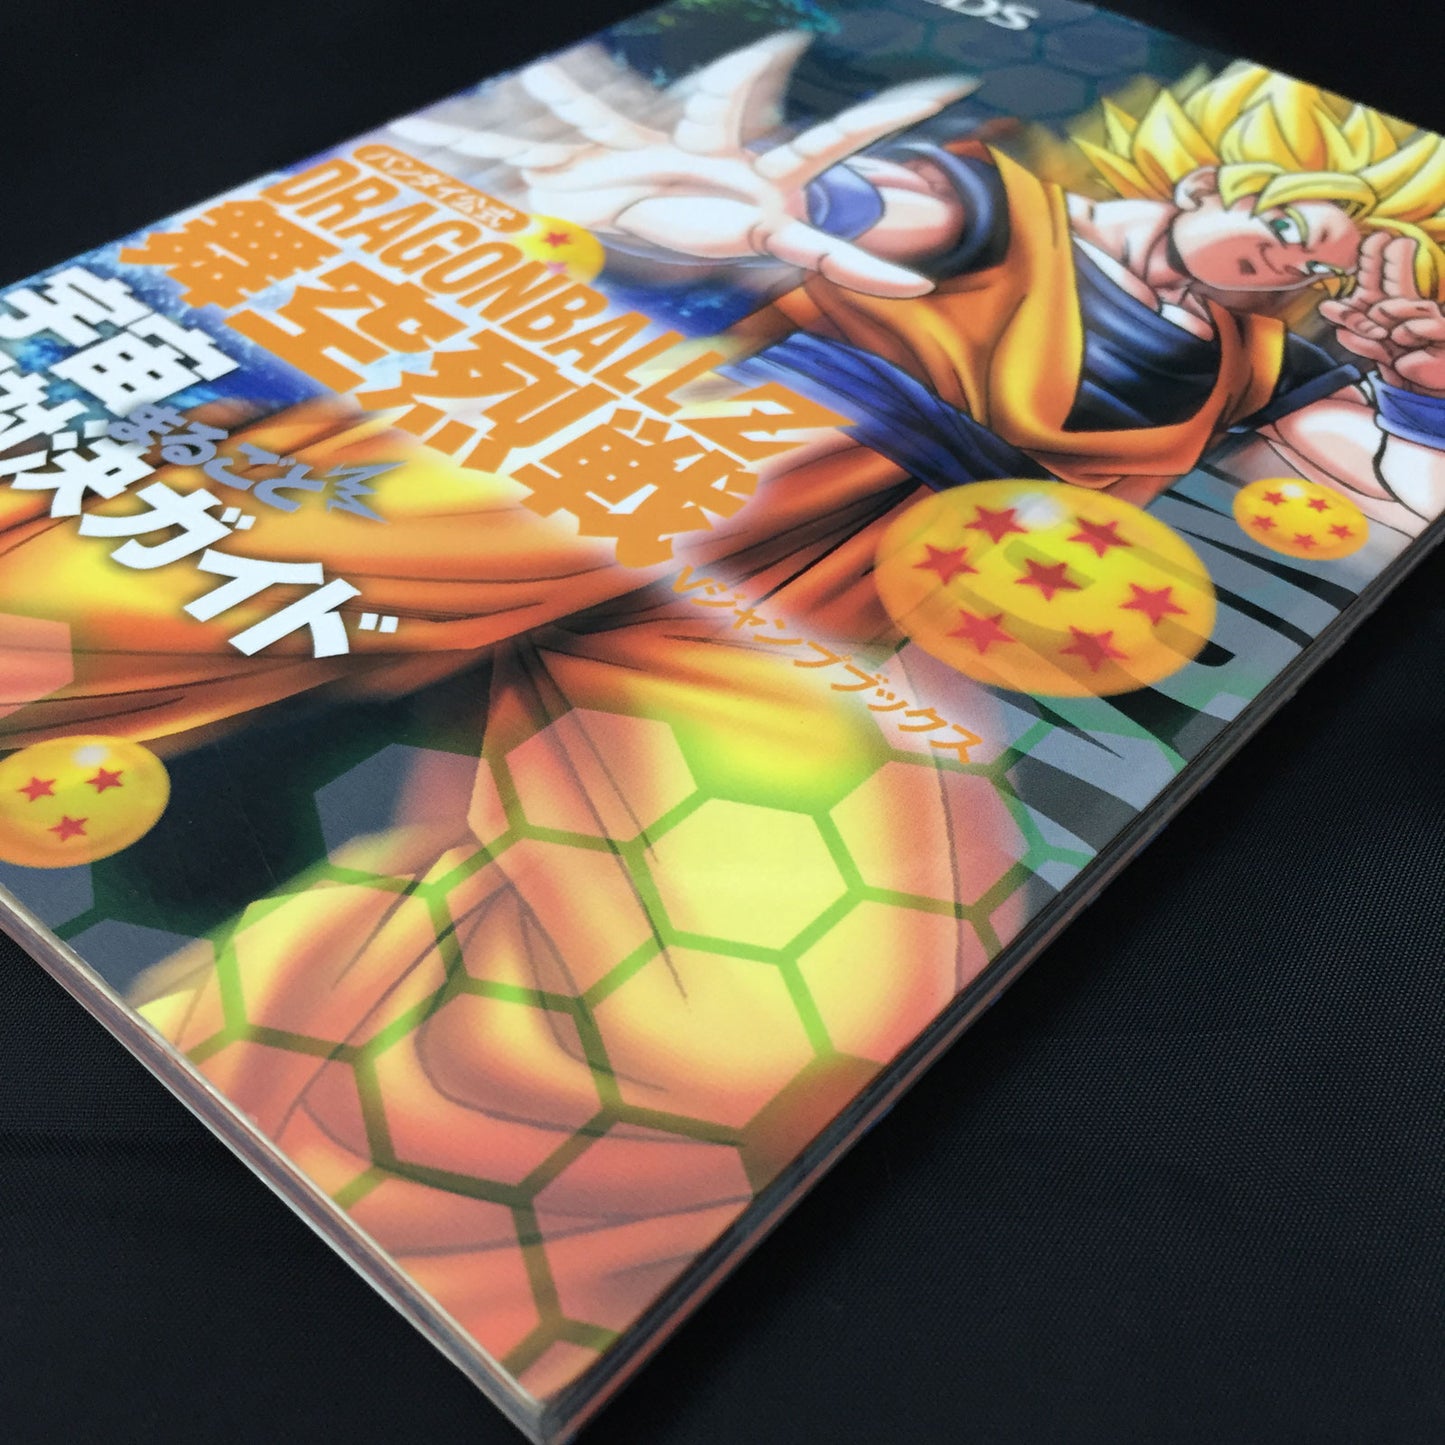 Dragon Ball Z Bukuu Ressen BANDAI Official Guide V JUMP Books